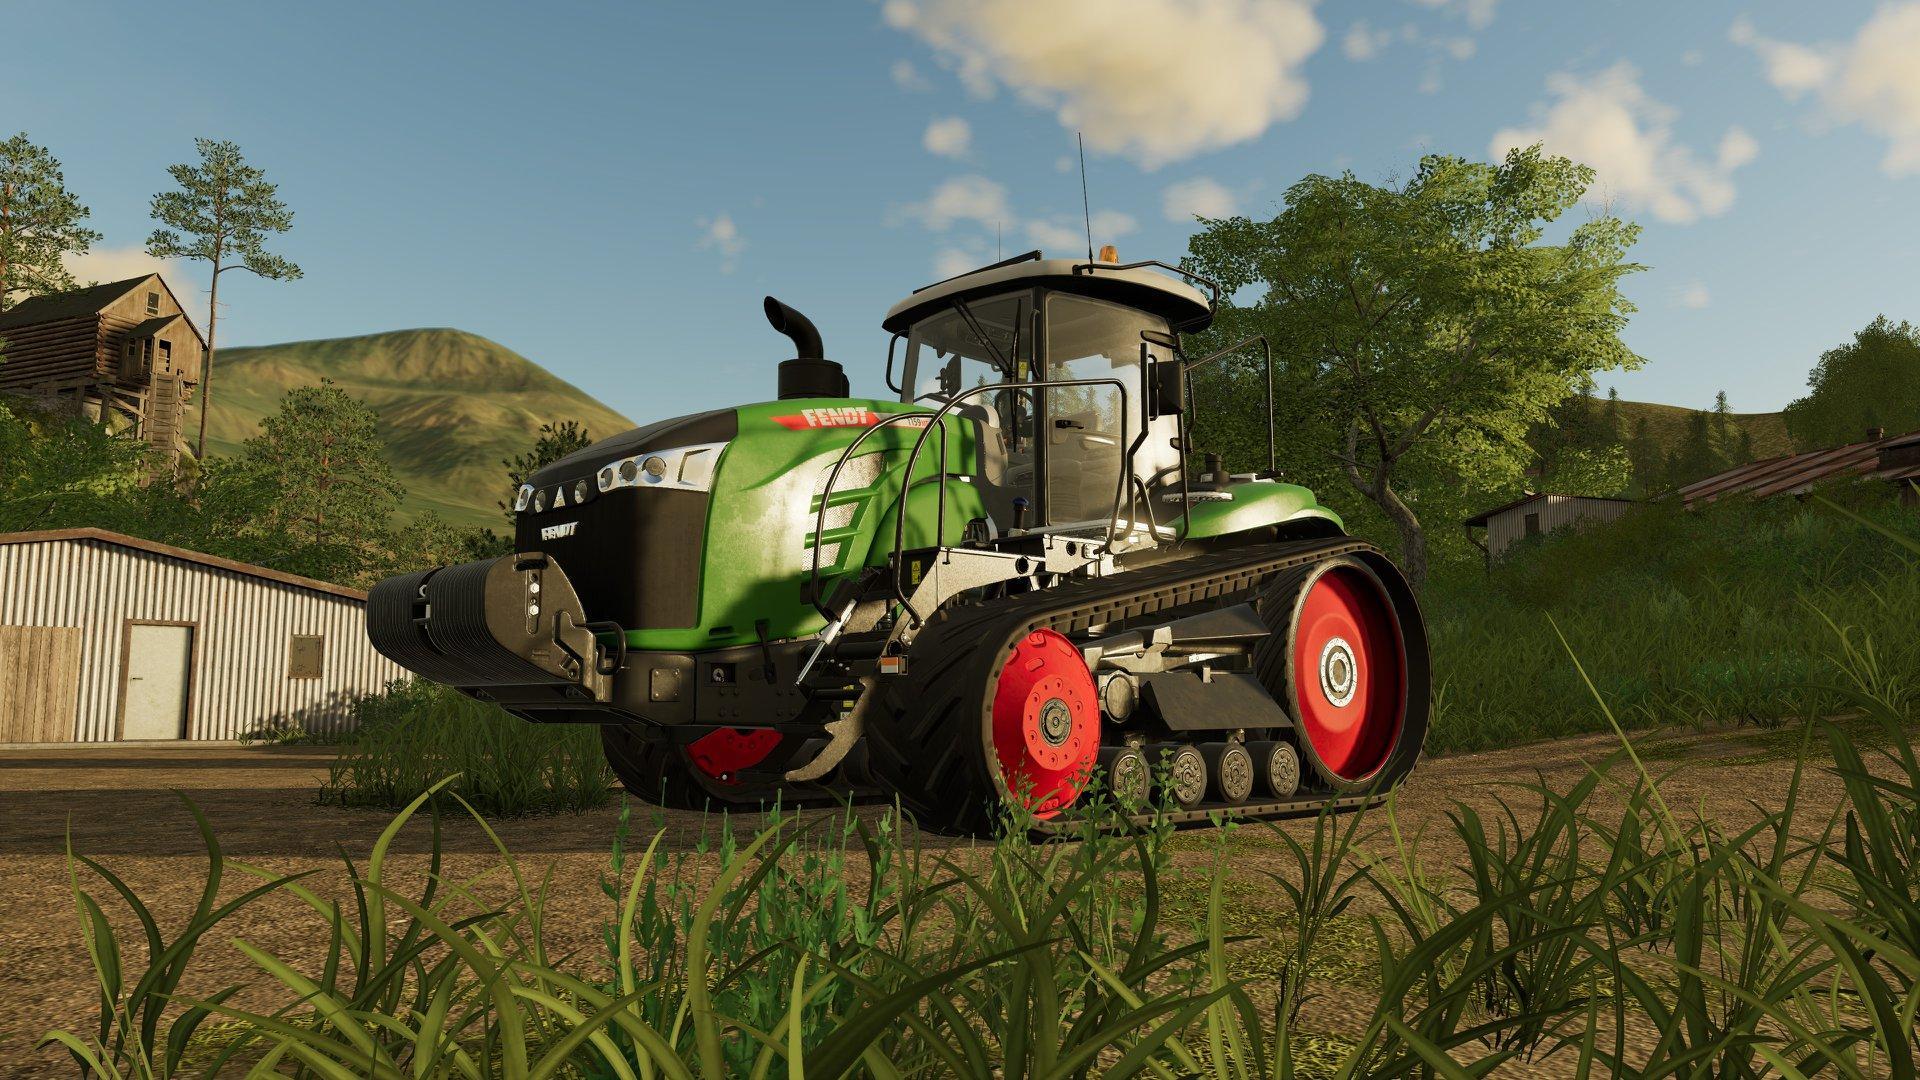 ps3 controller on farming simulator 15 pc